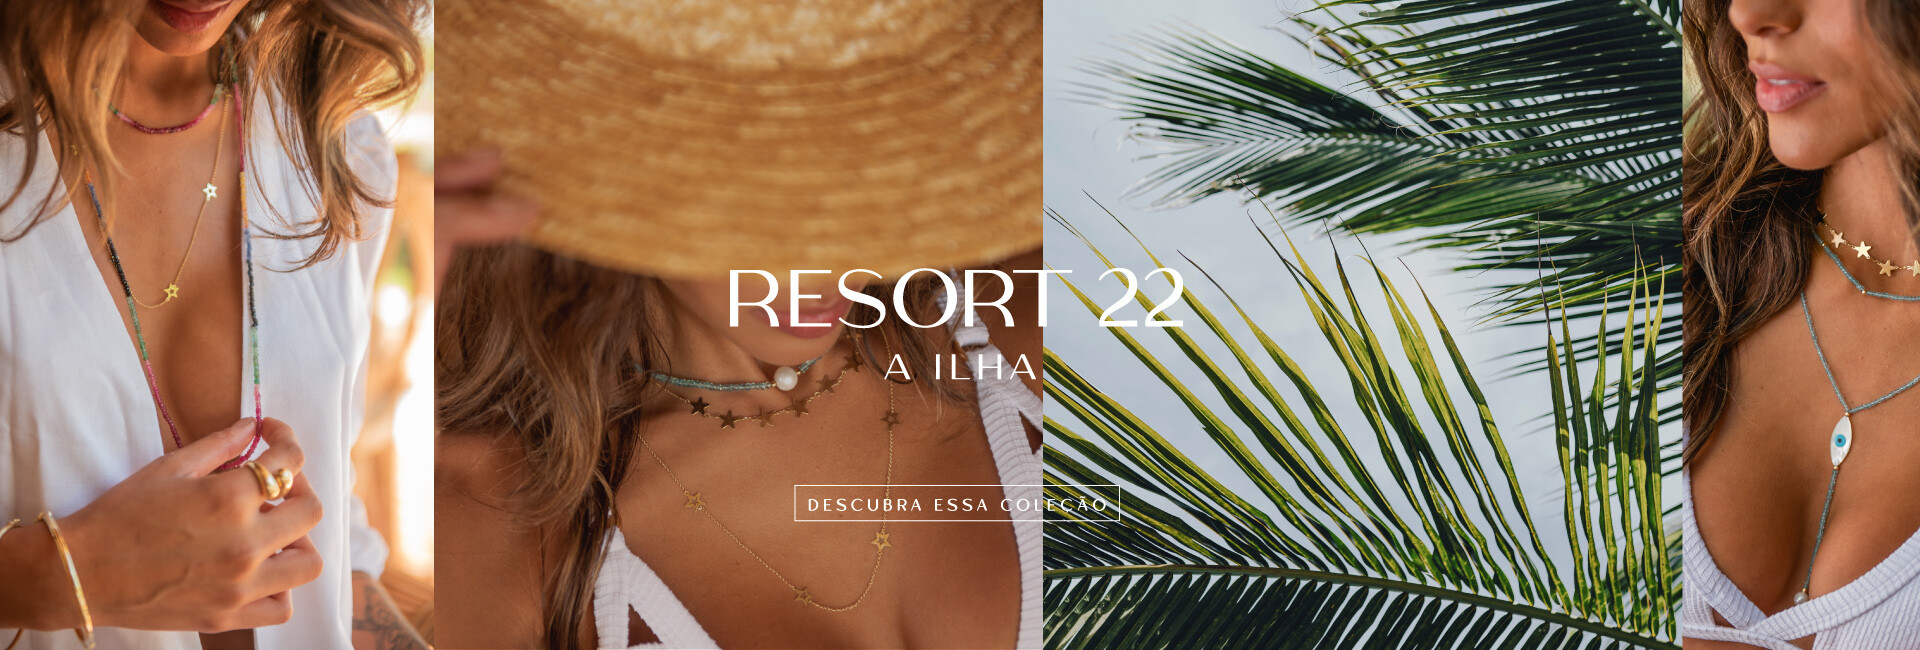 Resort 22